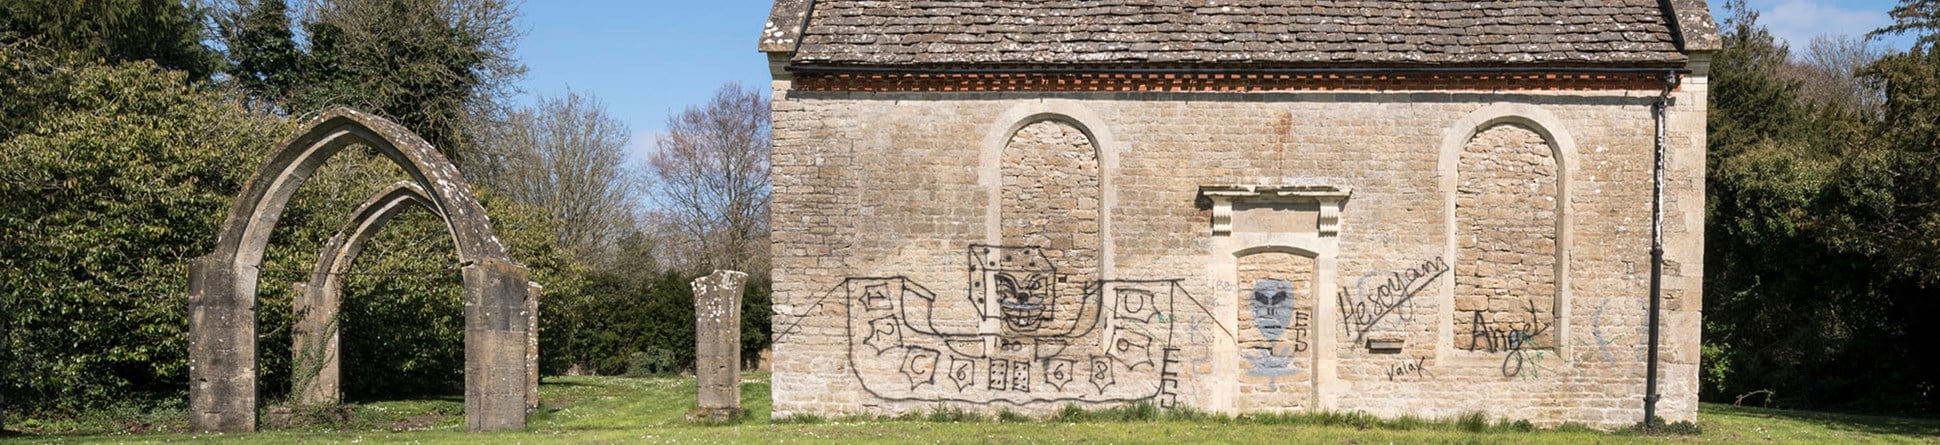 Graffiti on a church building